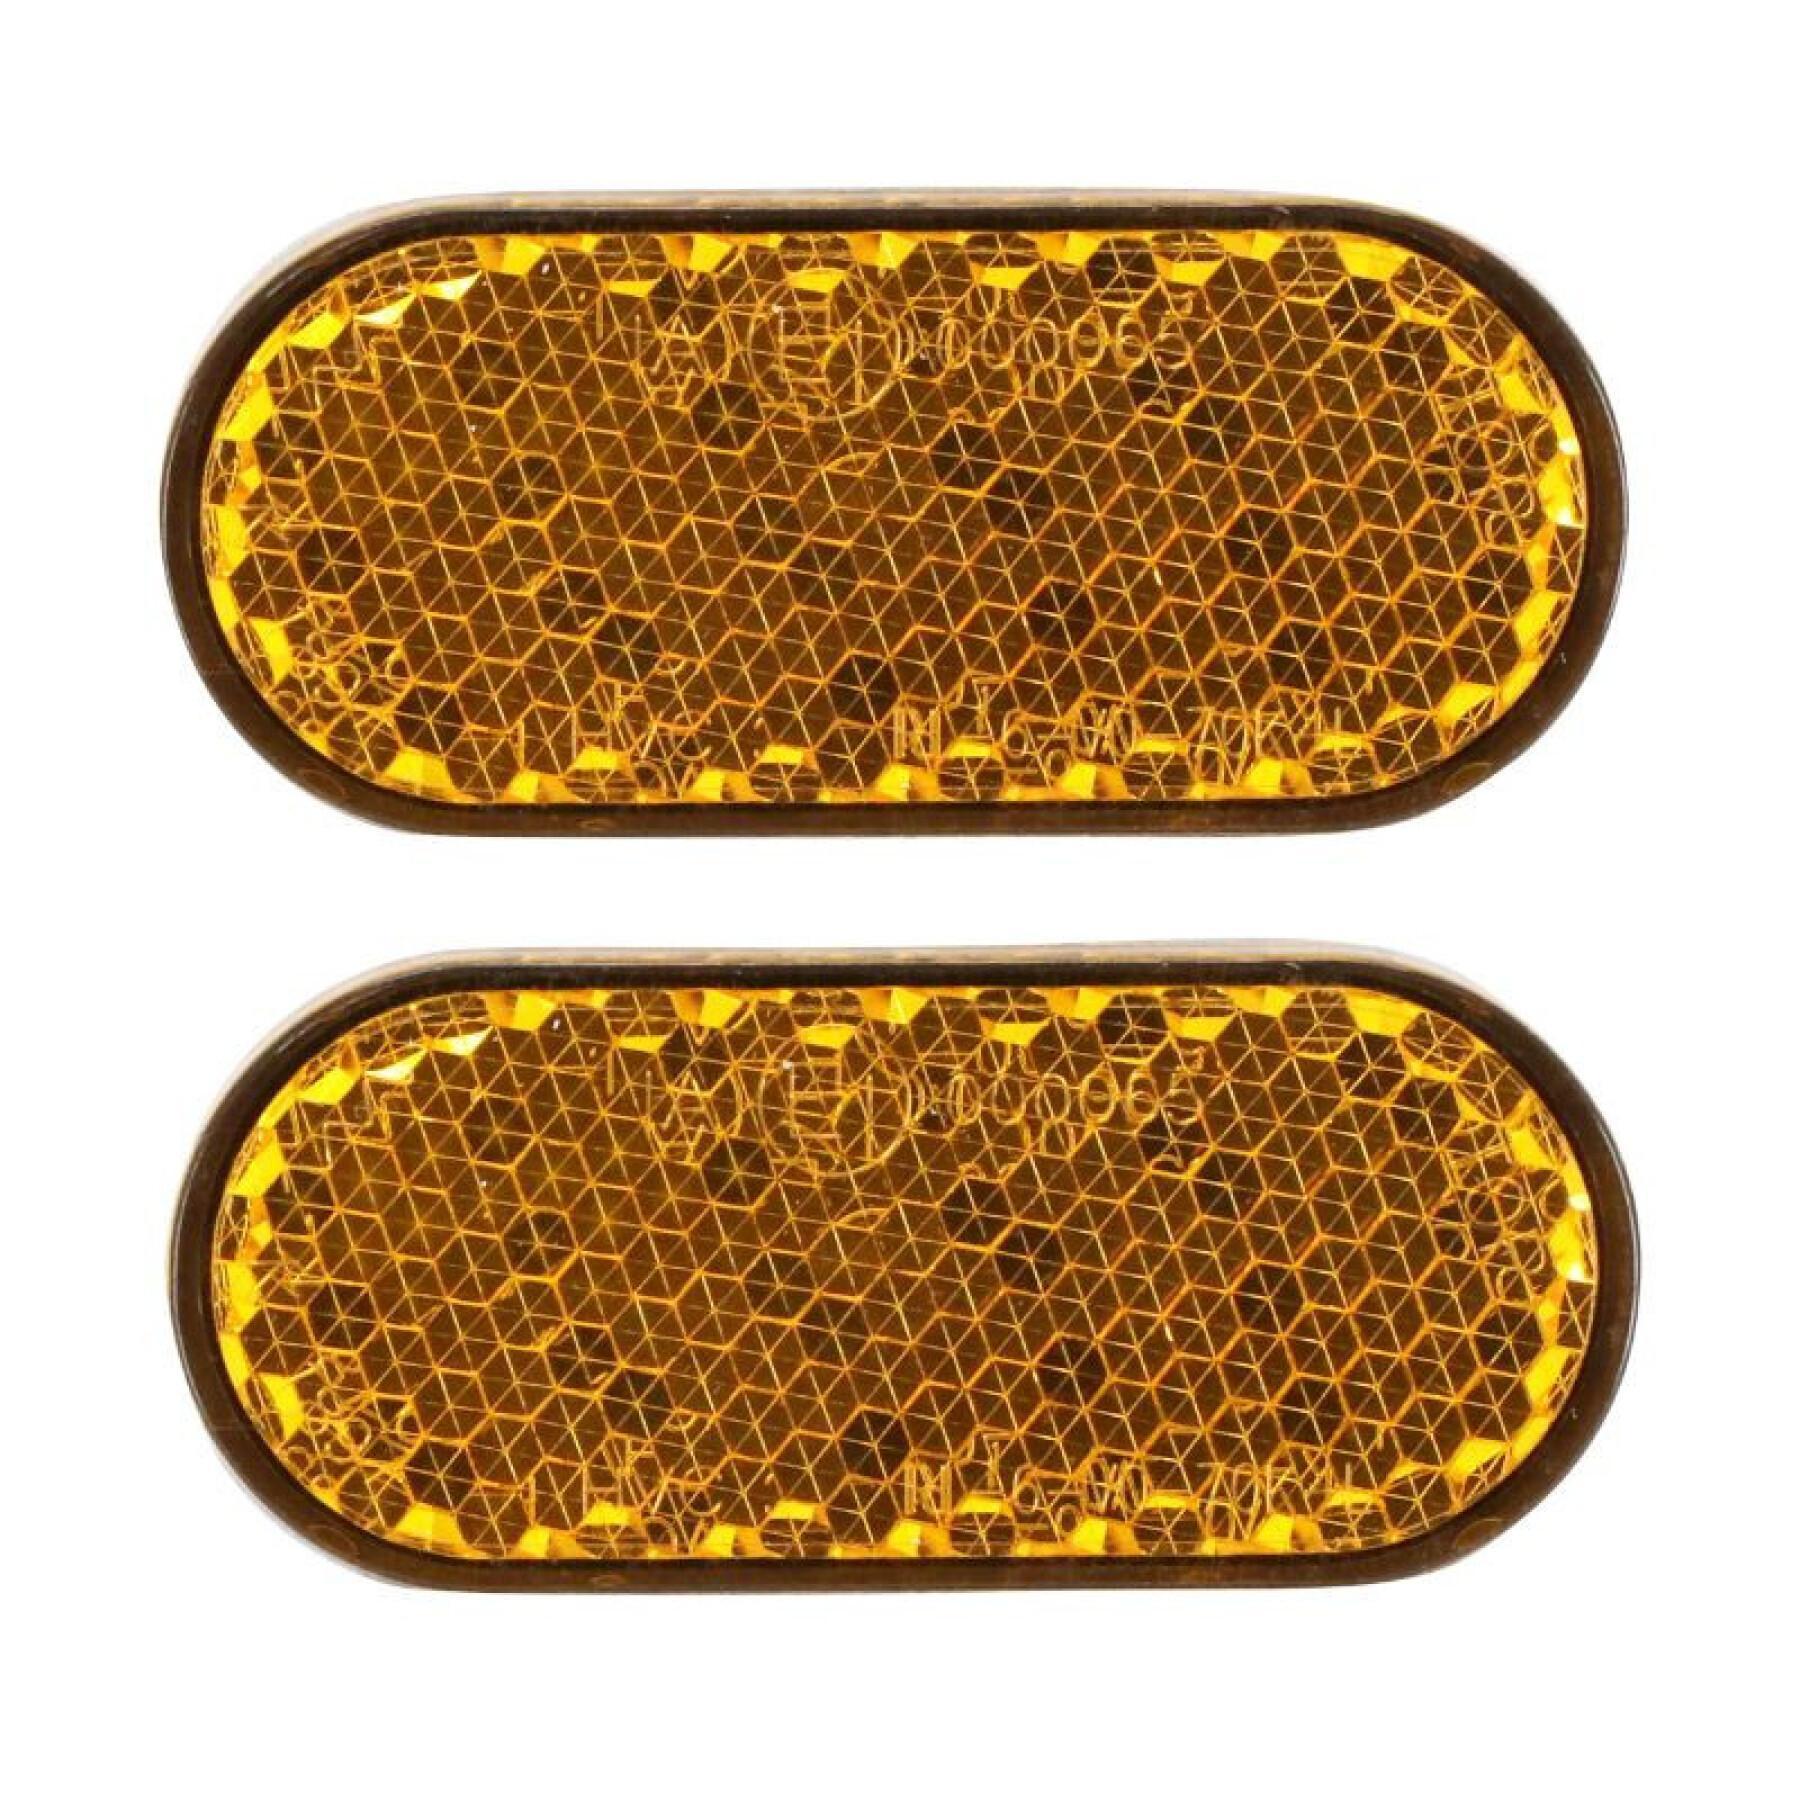 Pares de reflectores - reflector de montaje lateral adhesivo P2R